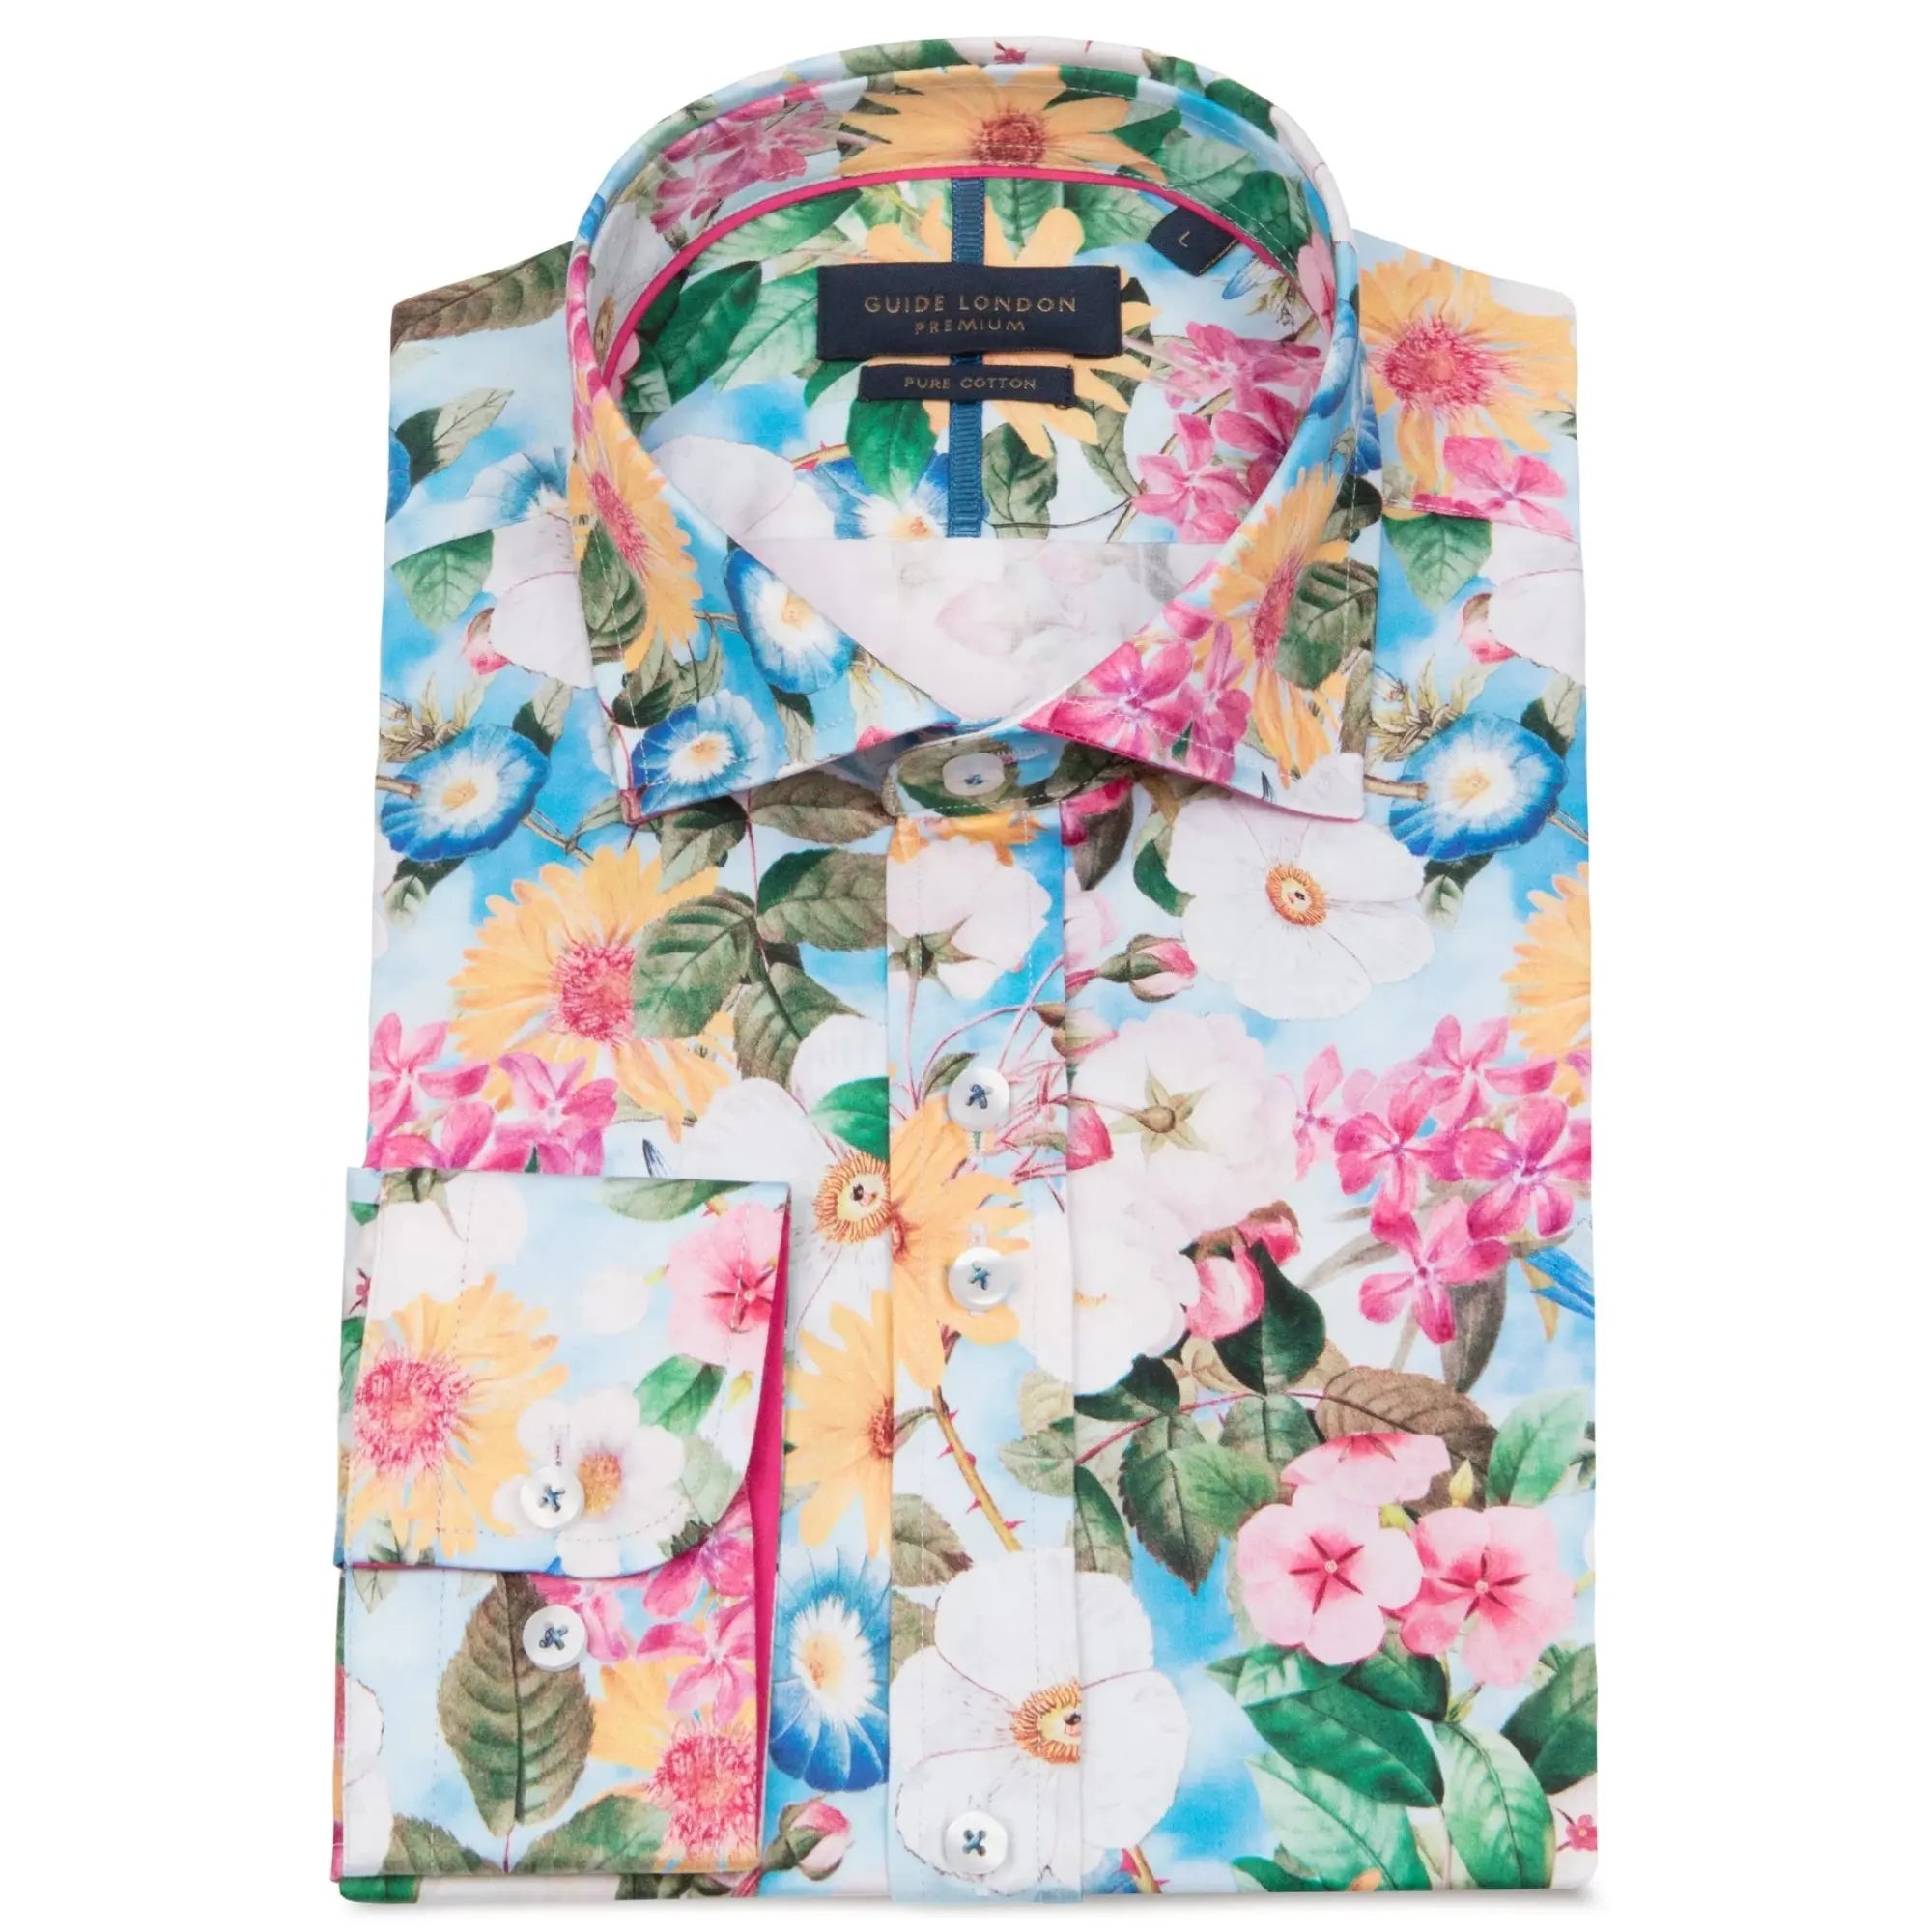 Guide London Flower Print Shirt - Multi